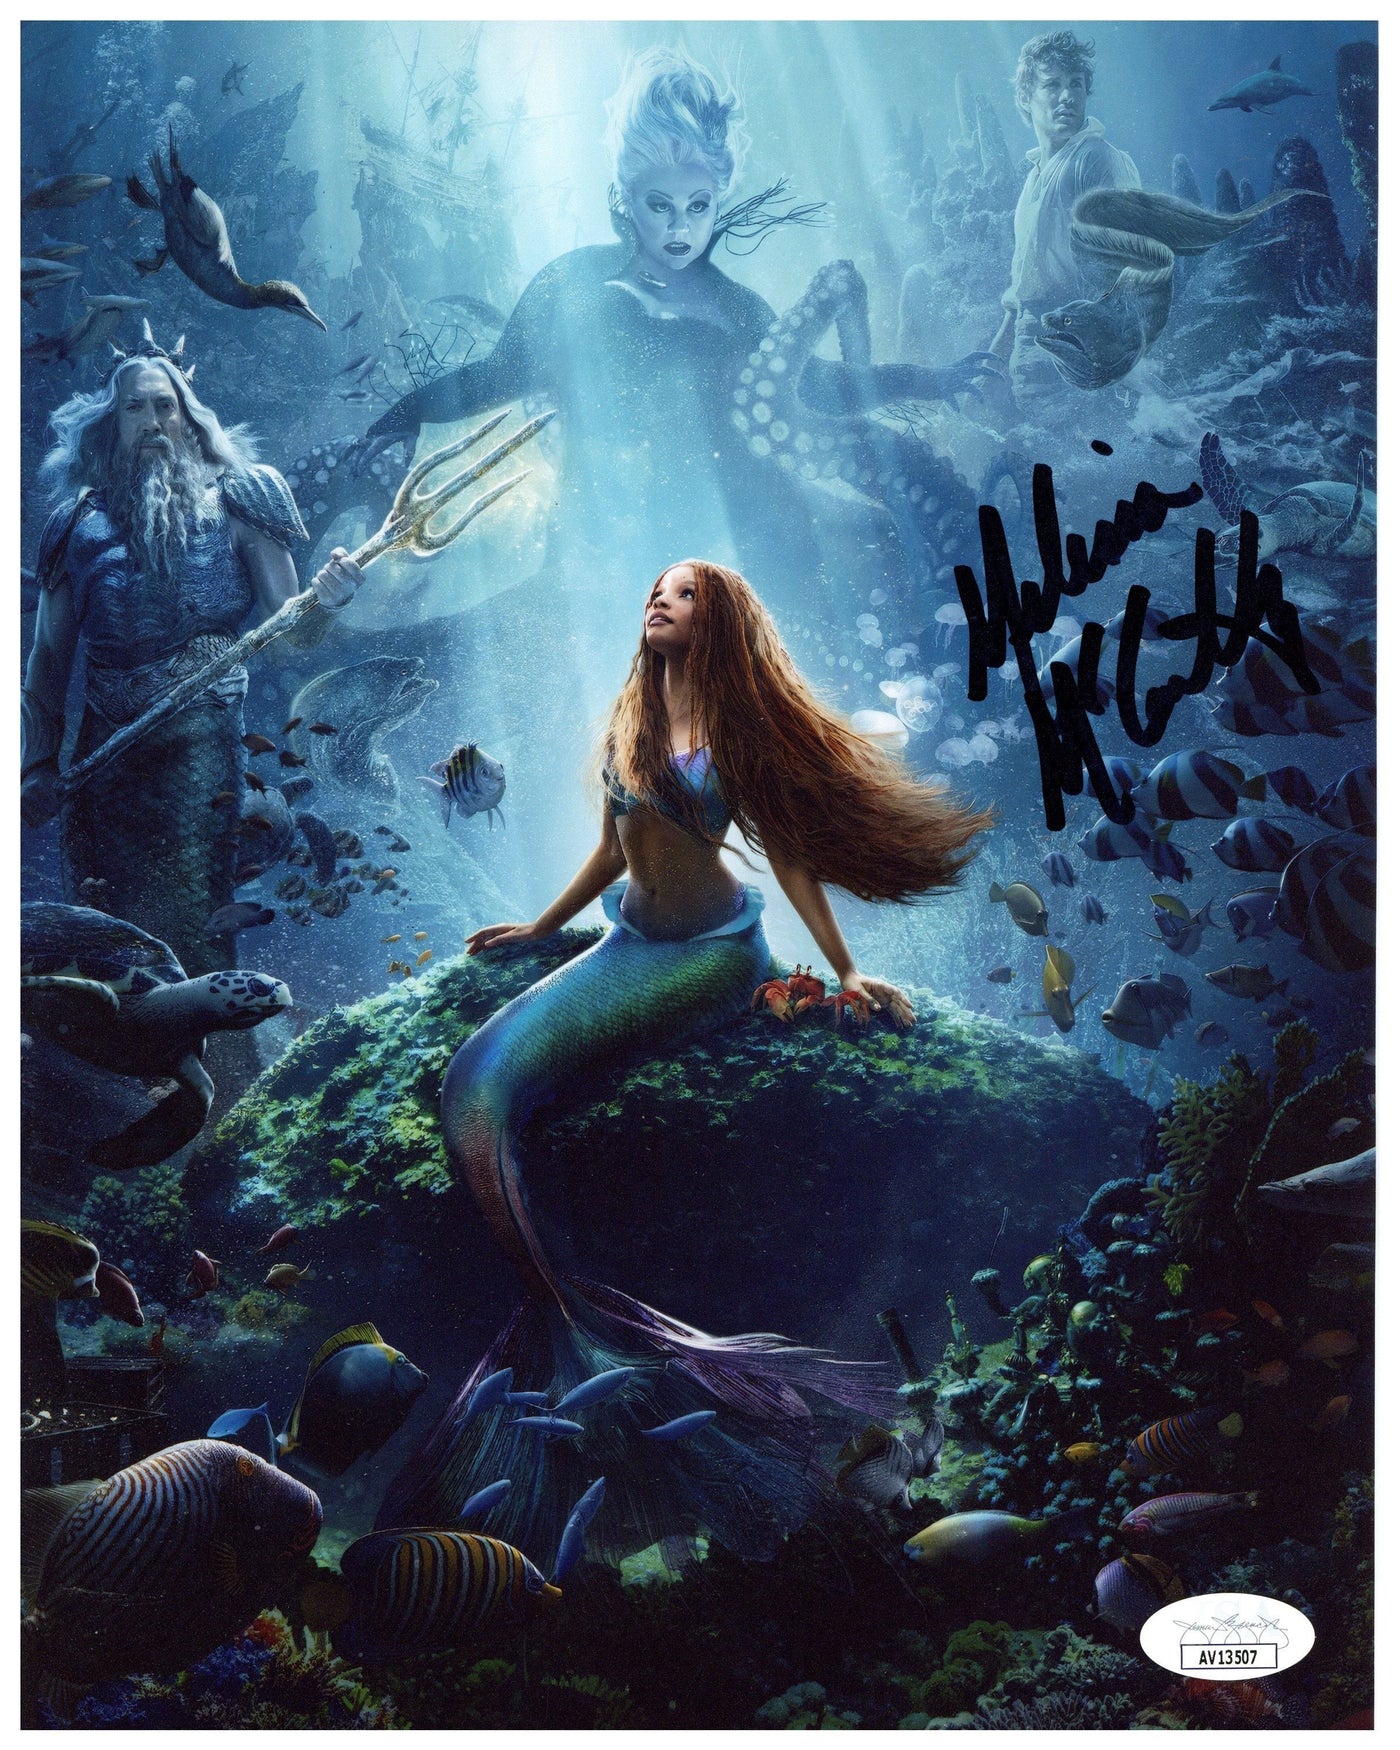 Melissa McCarthy Signed 8x10 Photo The Little Mermaid Autographed JSA COA #3